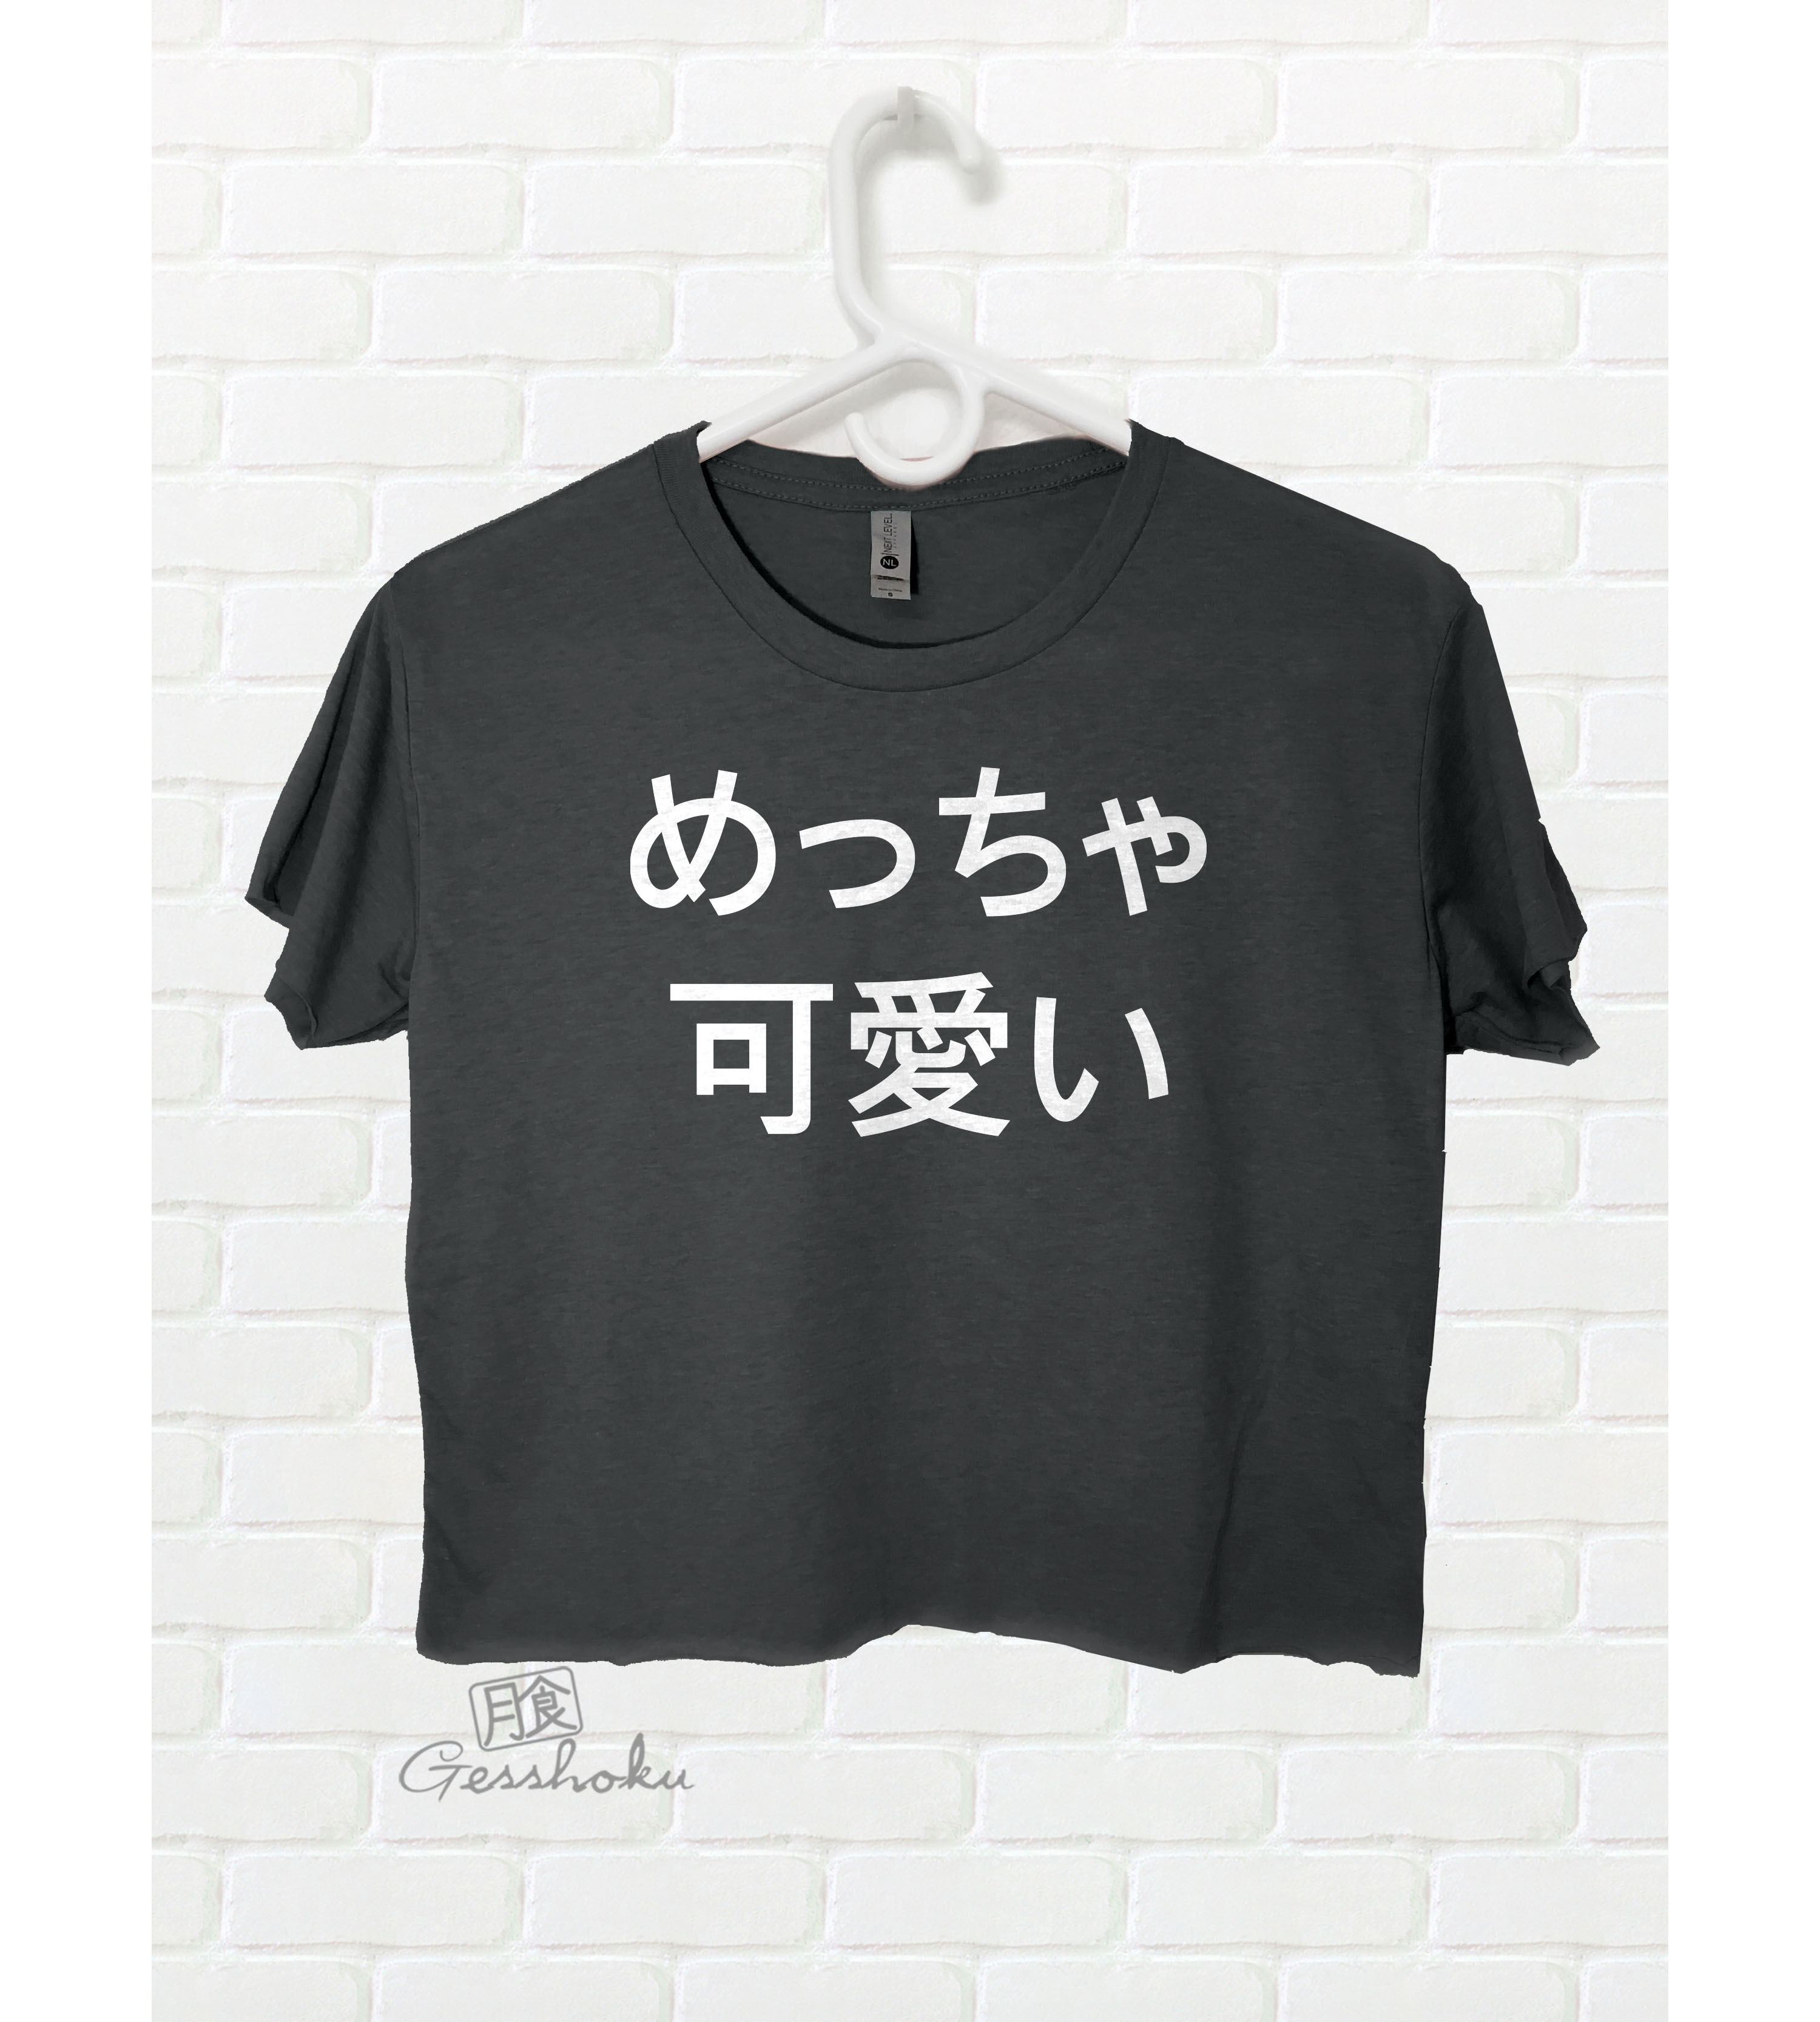 Meccha Kawaii Crop Top T-shirt - Black